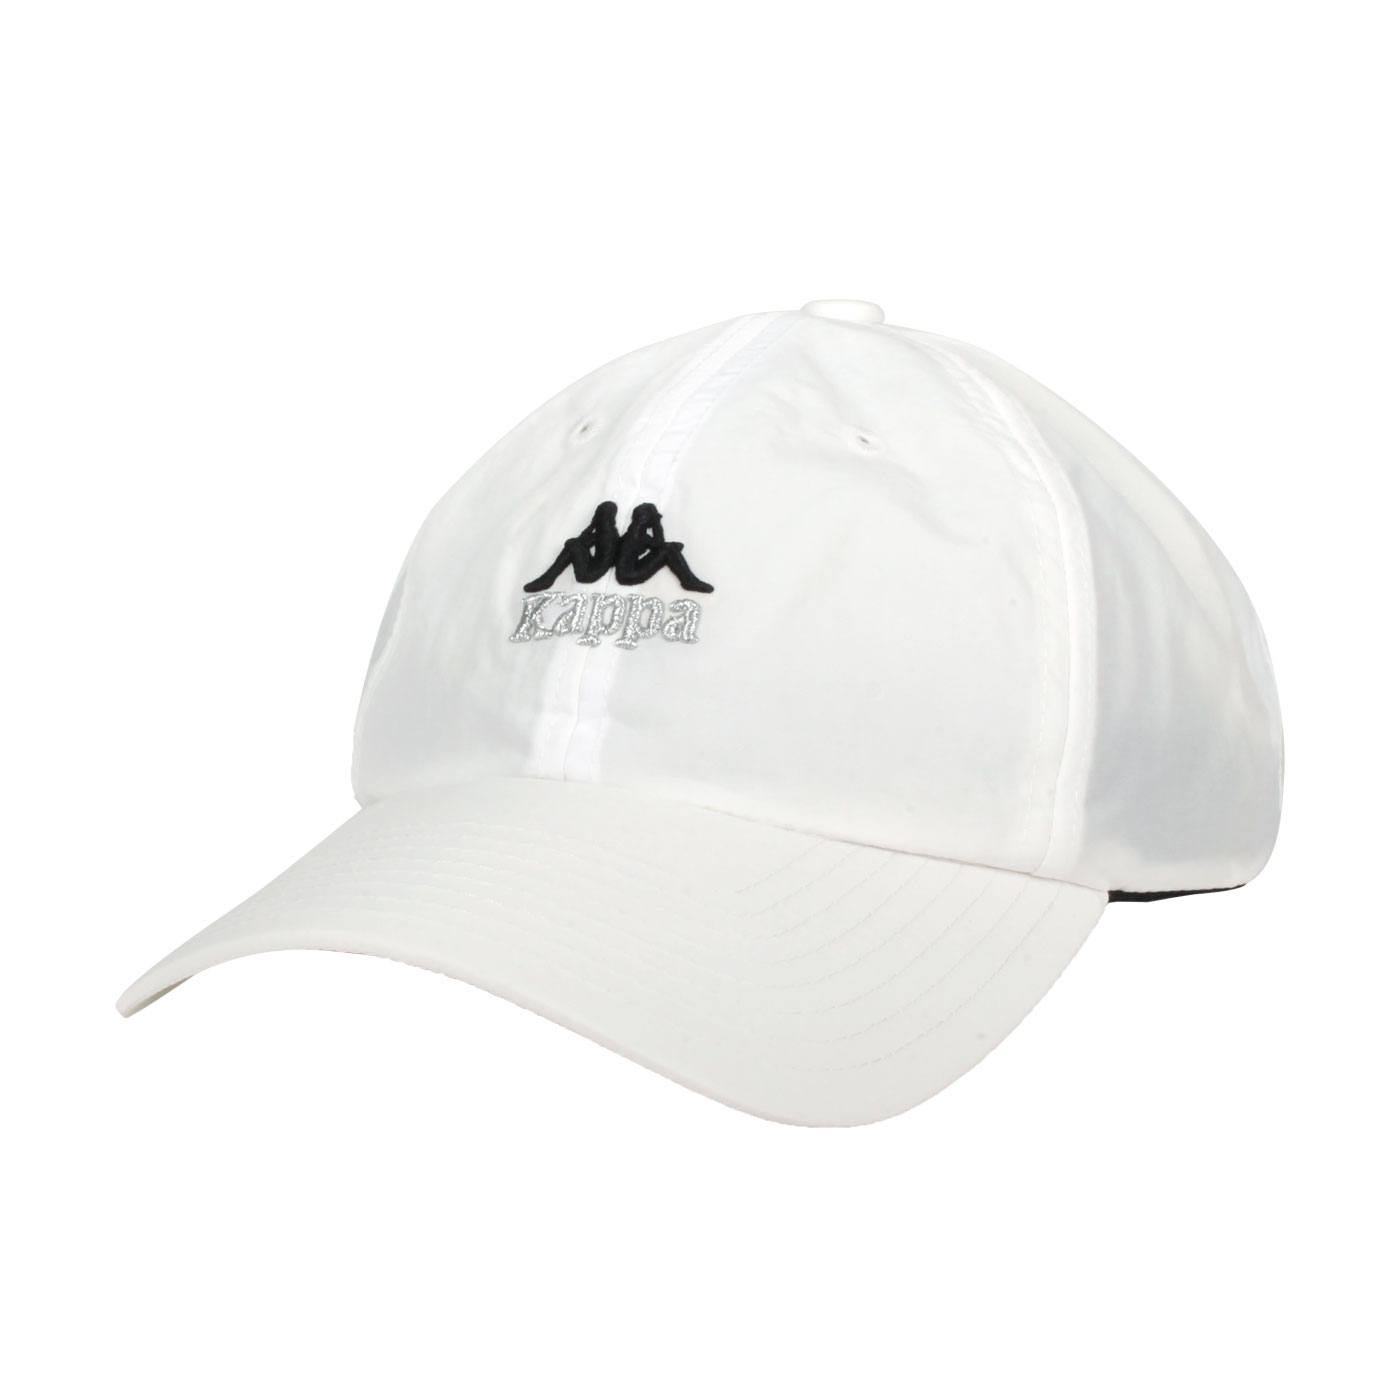 KAPPA 運動帽 321956W-001 - 白黑銀